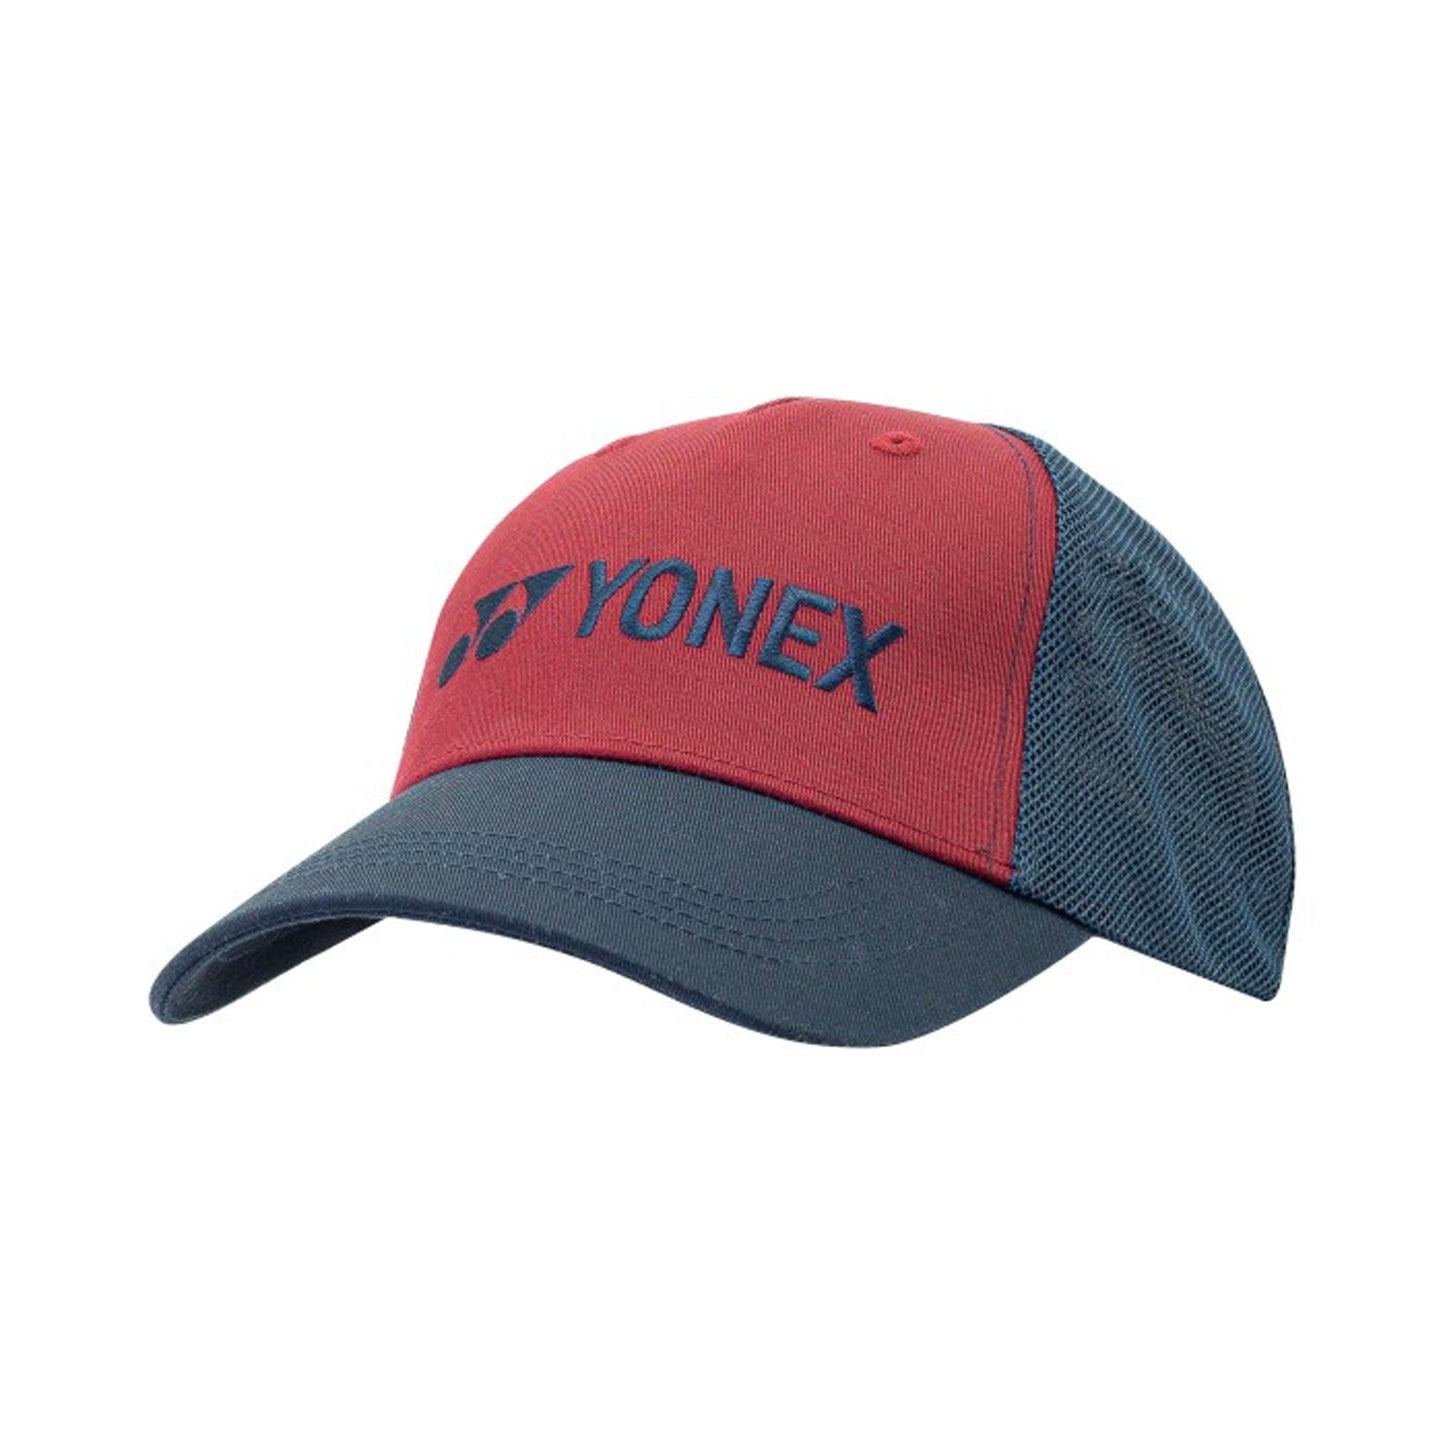 Yonex T050-300-S Sports Cap - Best Price online Prokicksports.com